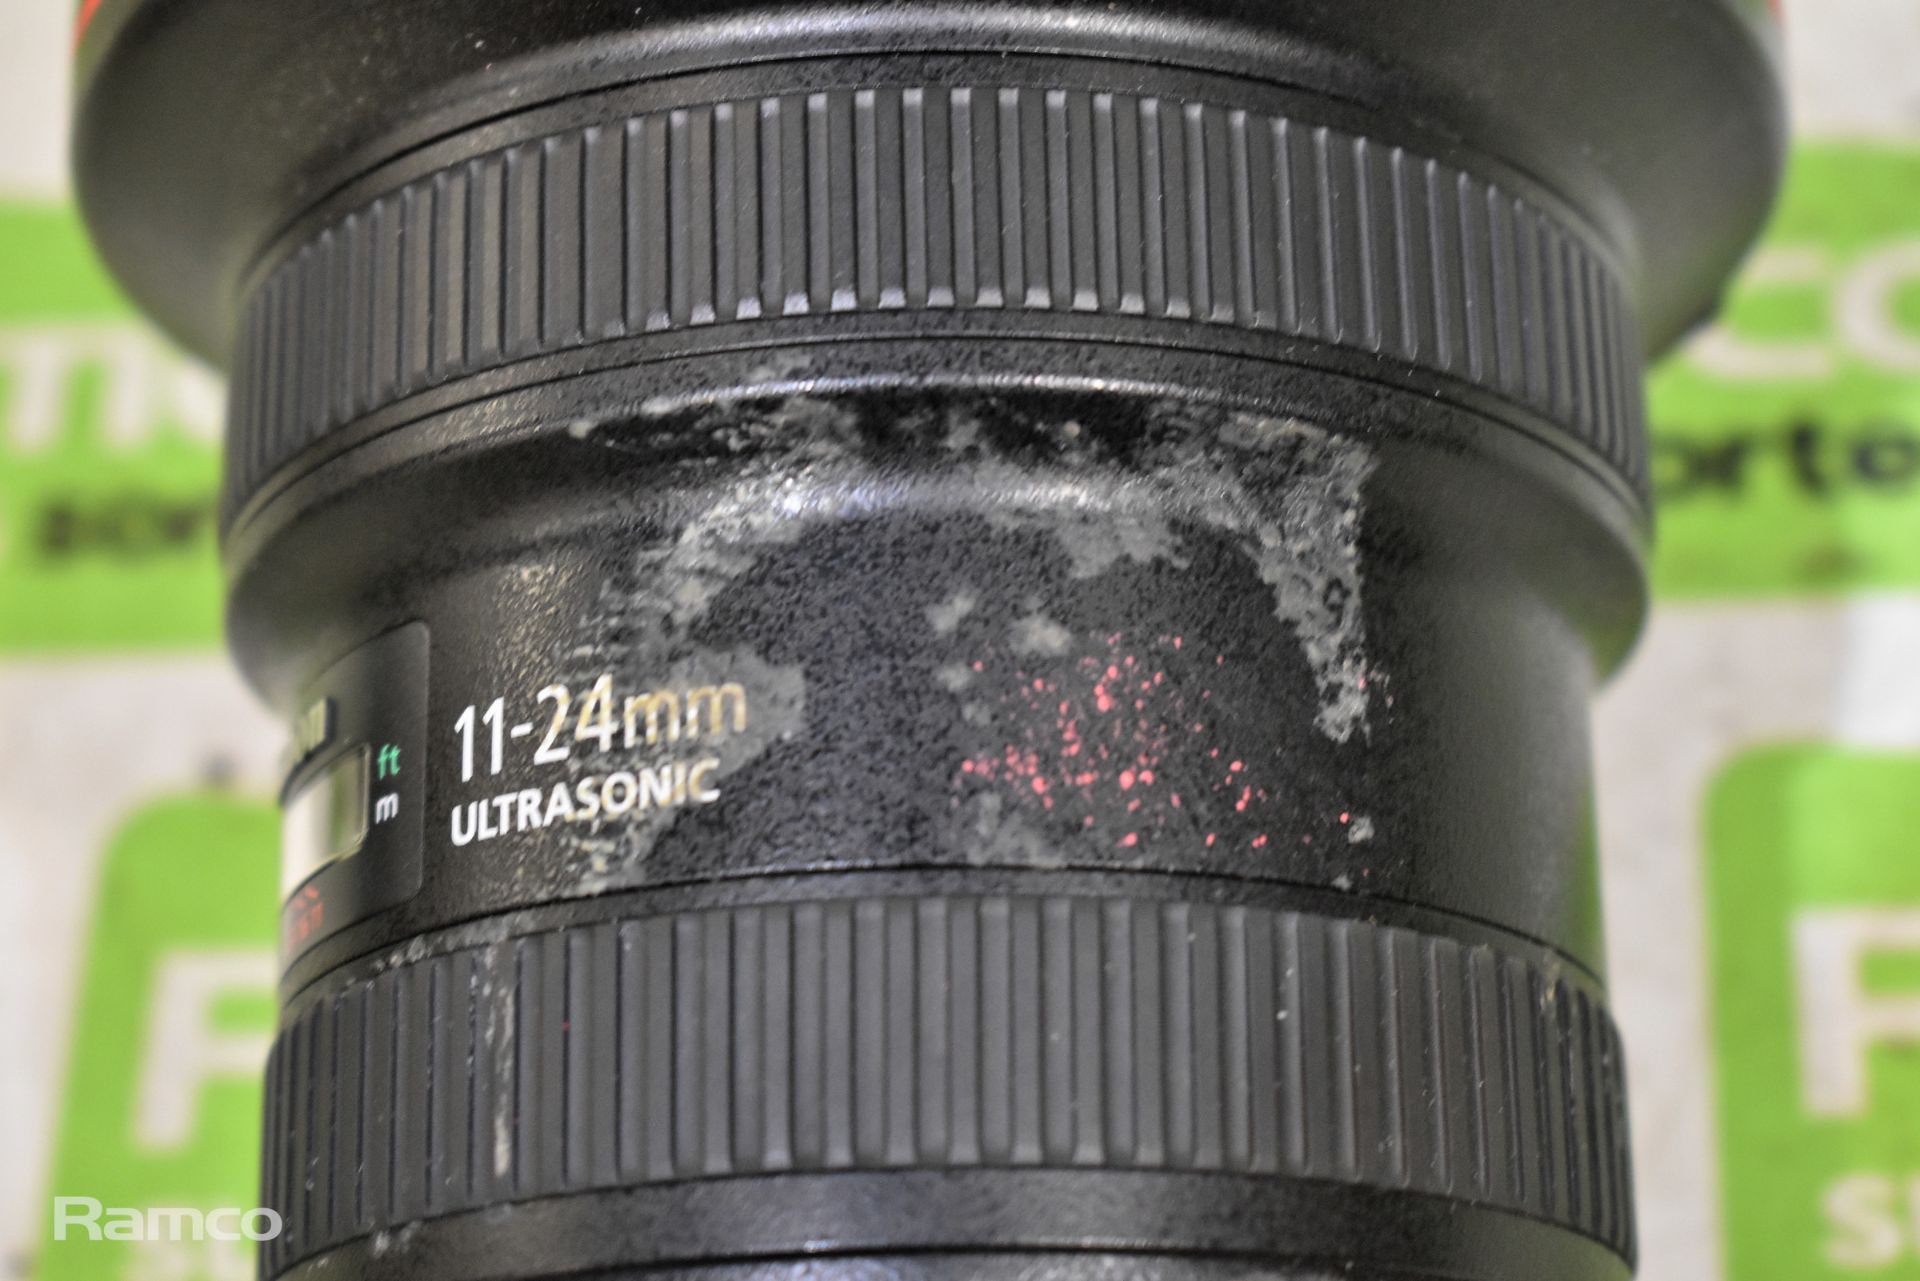 Canon Zoom lens - EF 11-24mm 1:4 L USM ultrasonic - fisheye - Image 7 of 8